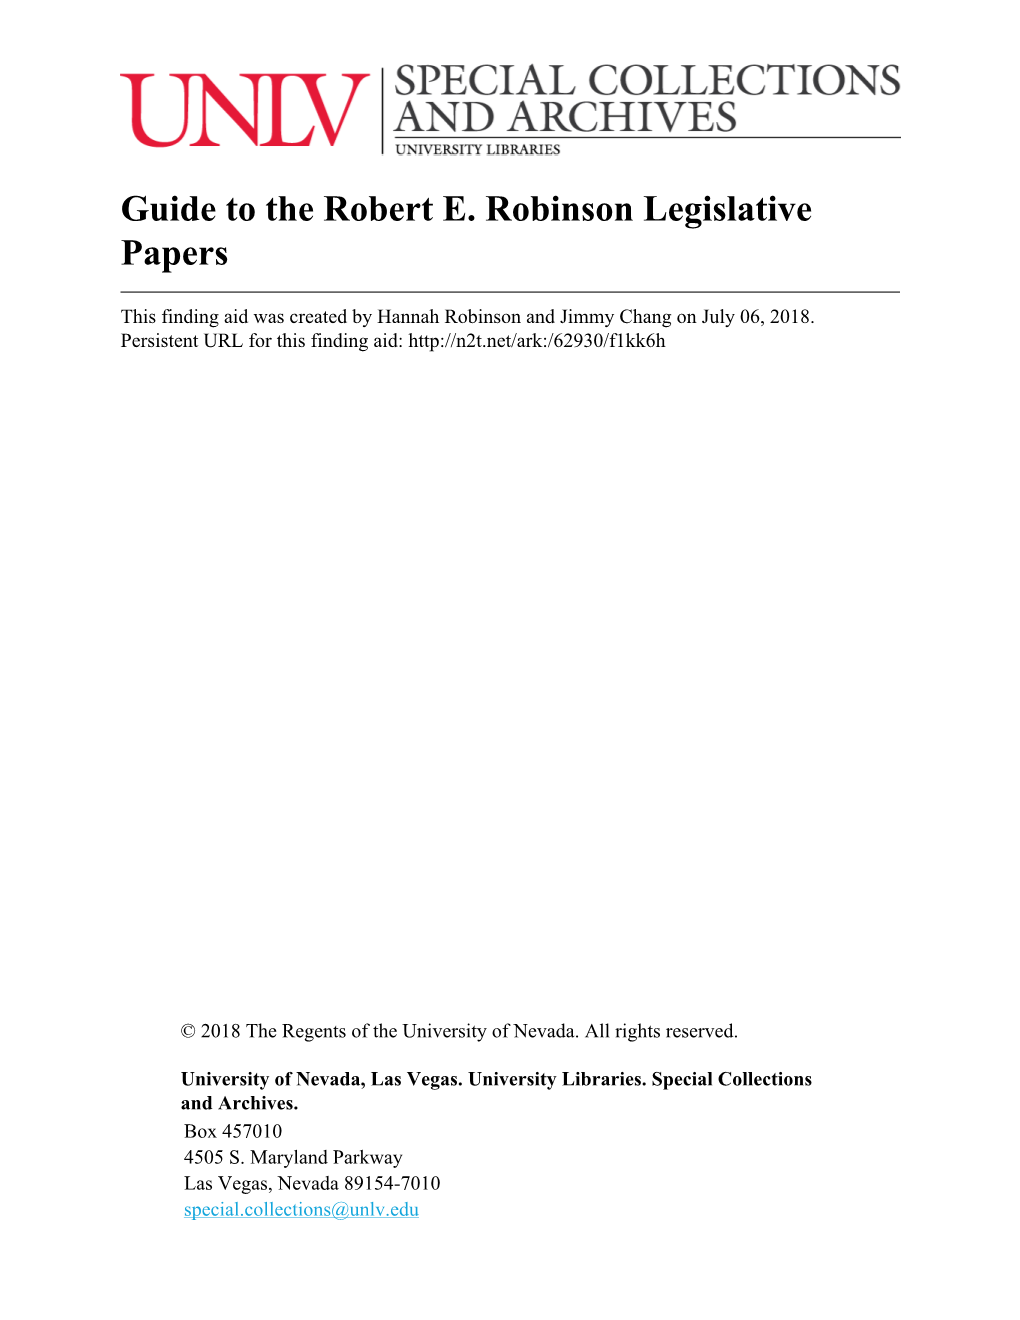 Guide to the Robert E. Robinson Legislative Papers